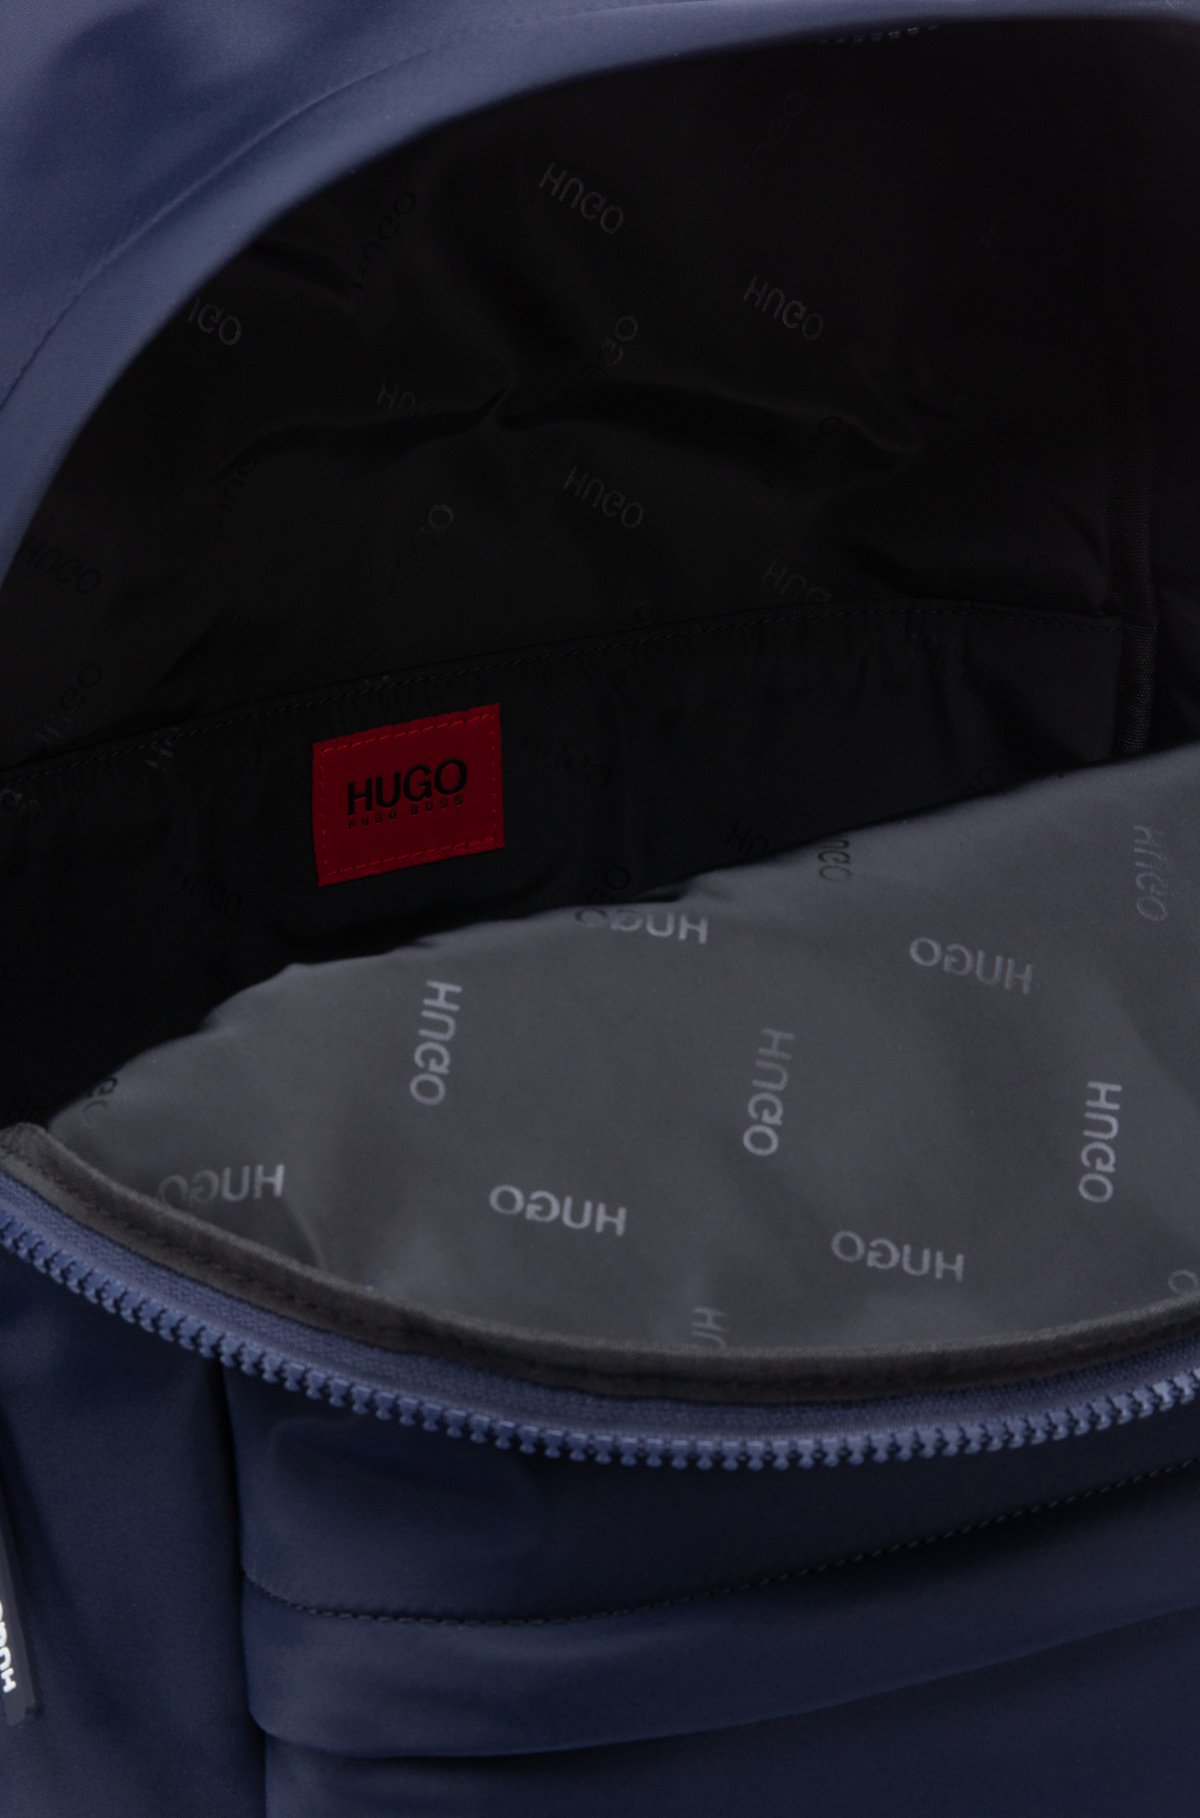 Backpack with new-season tire-print logo, Dark Blue